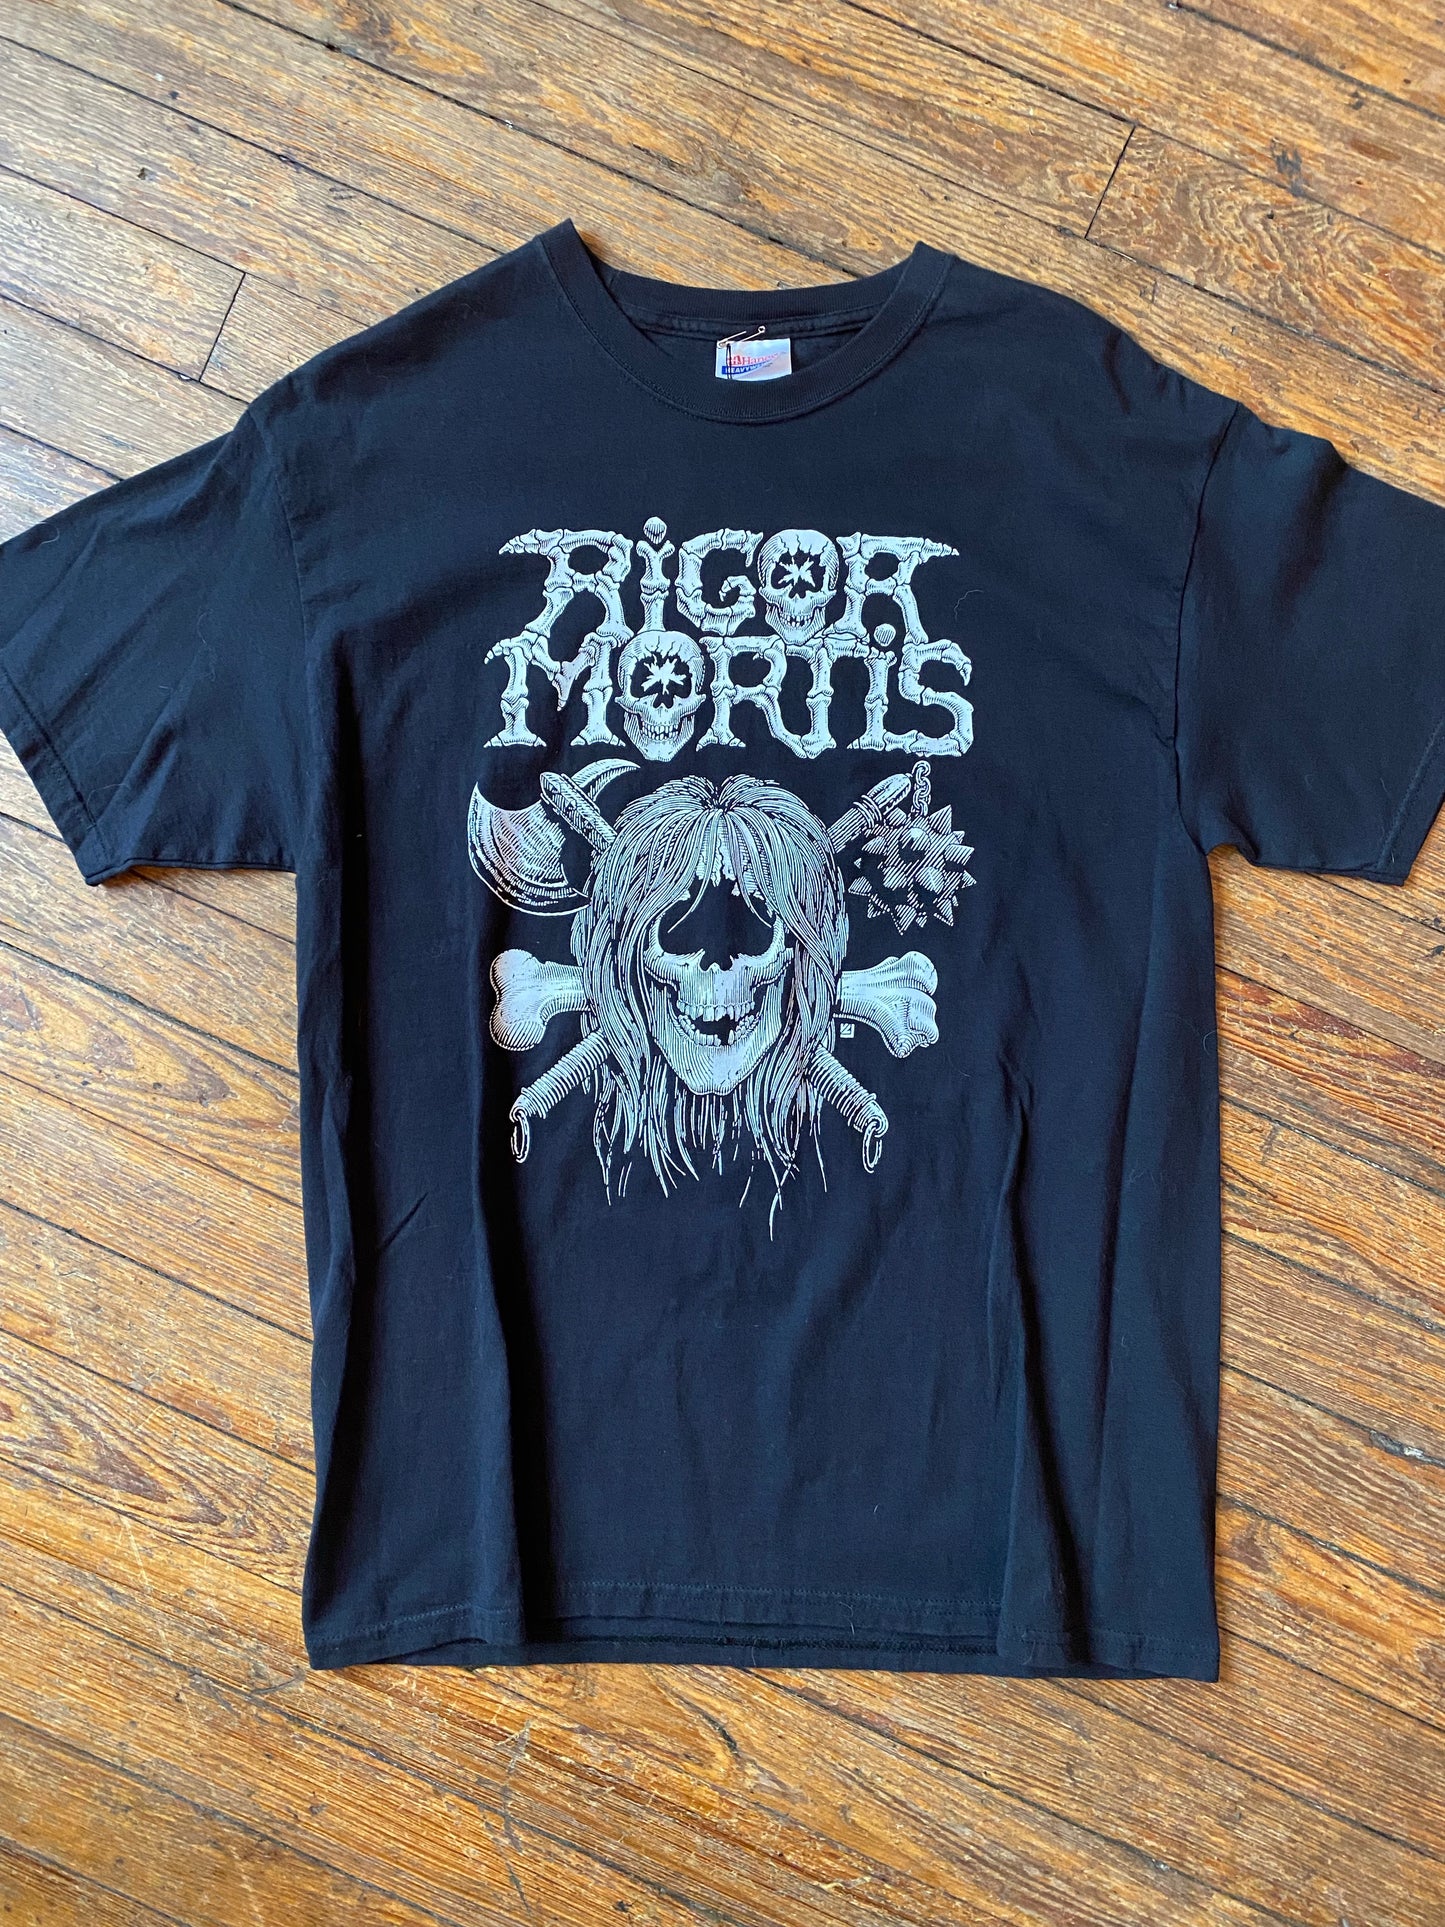 Y2K Rigor Mortis Self-Titled Album Cover Reprint T-Shirt